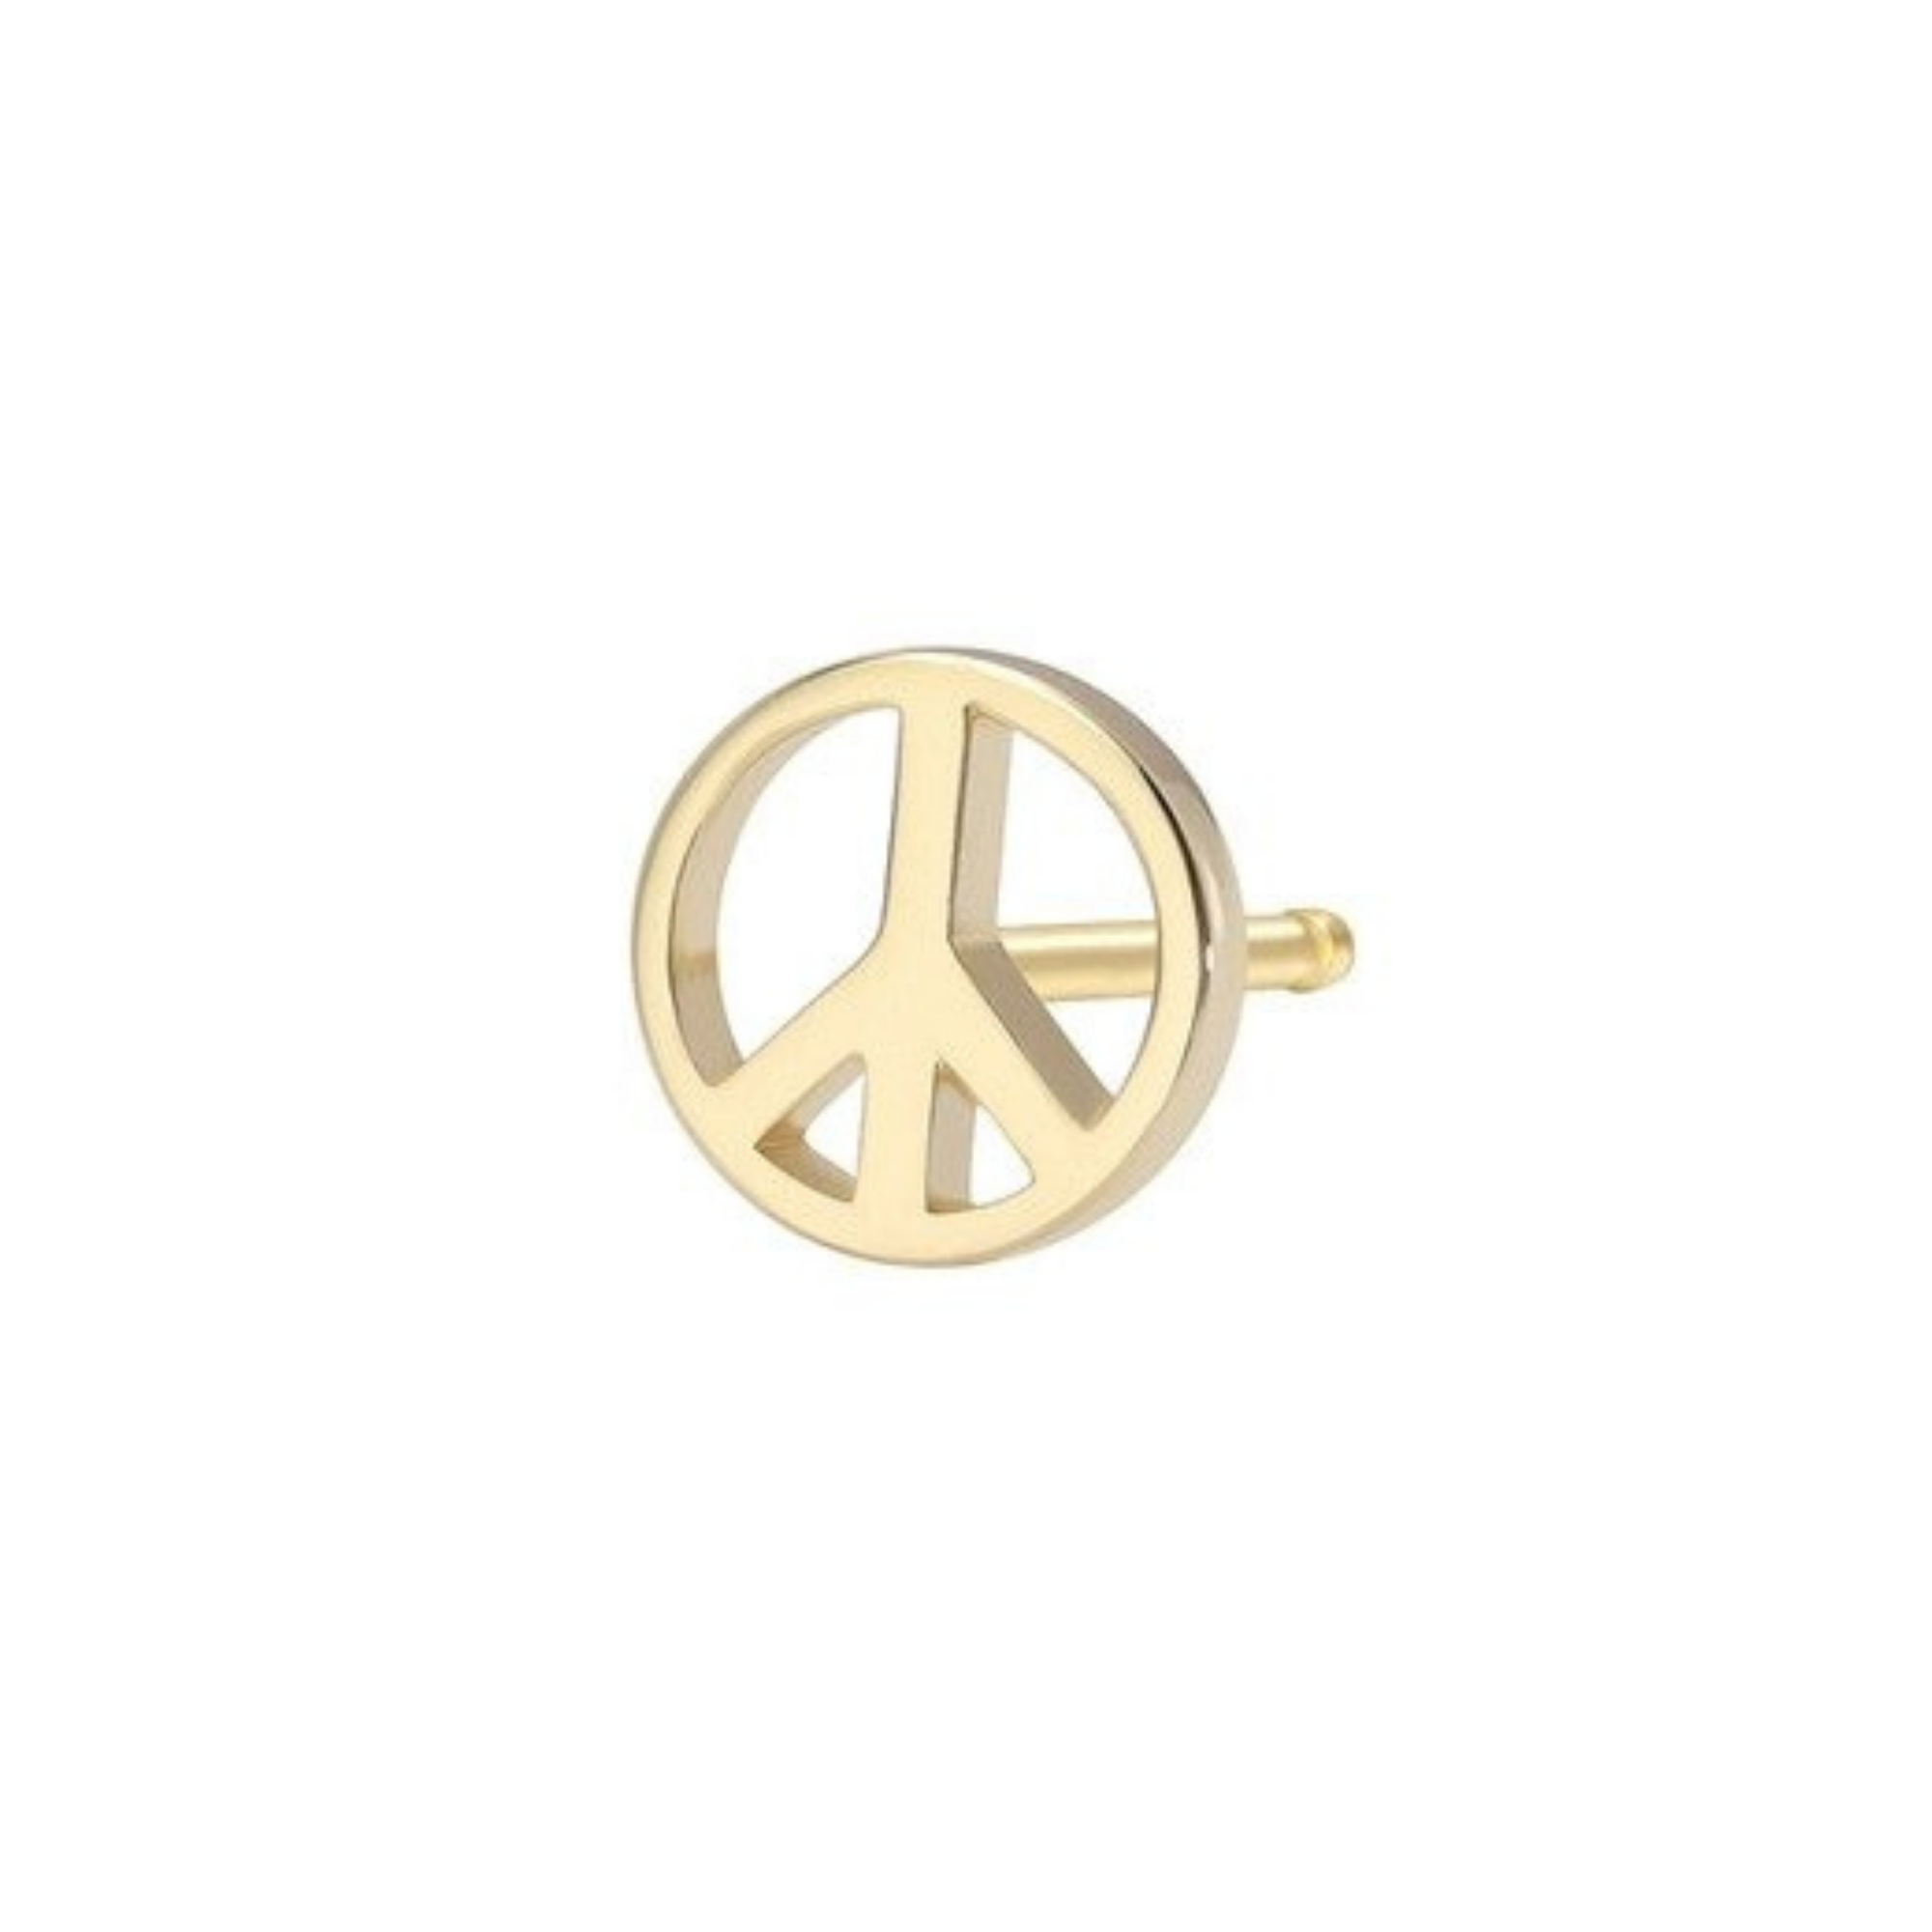 Zoe Lev 14k Gold Tiny Peace Sign Stud Earring, $95